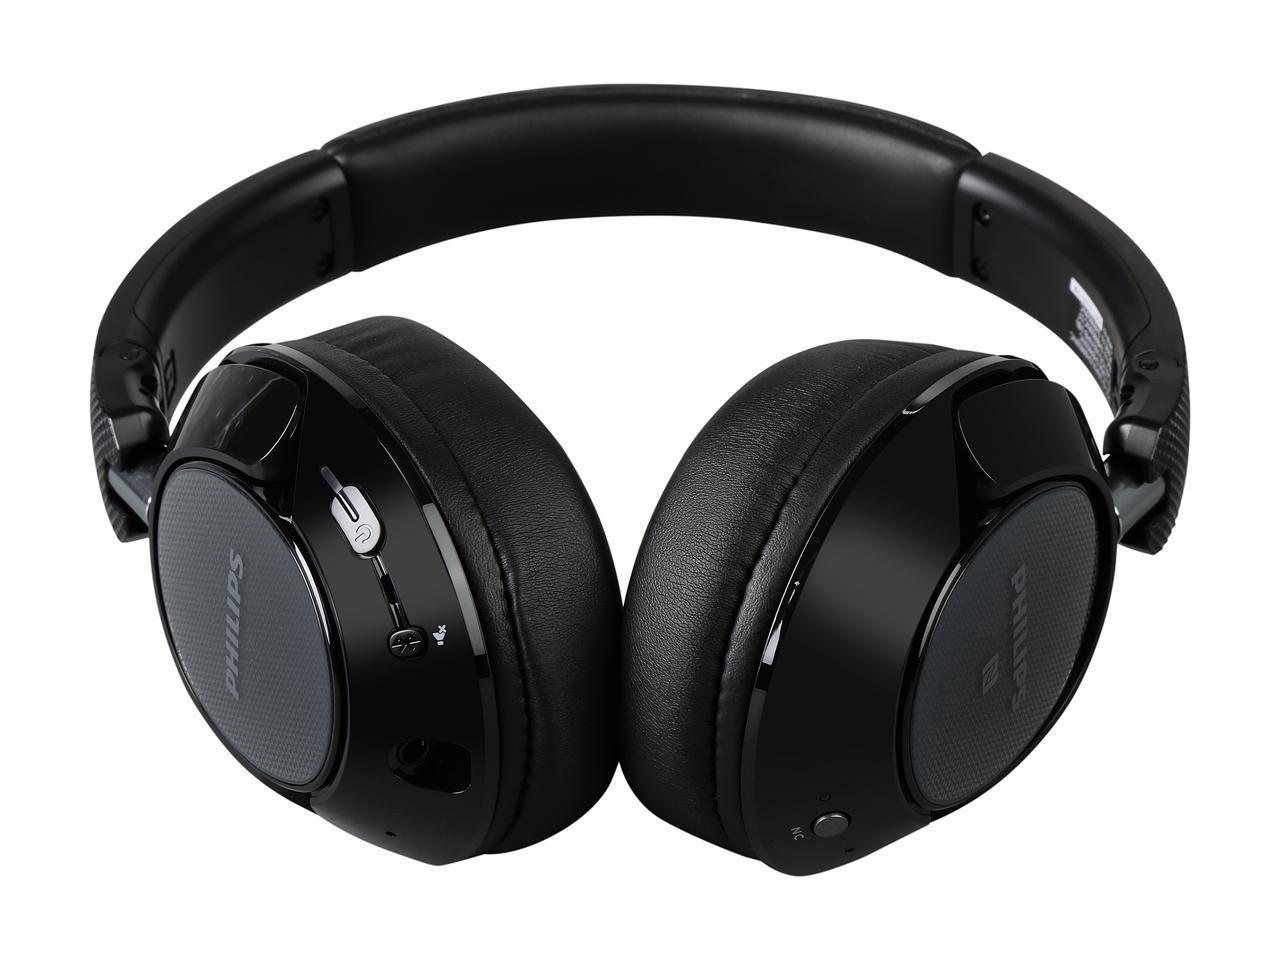 Philips wireless noise canceling over-ear headphones for $70